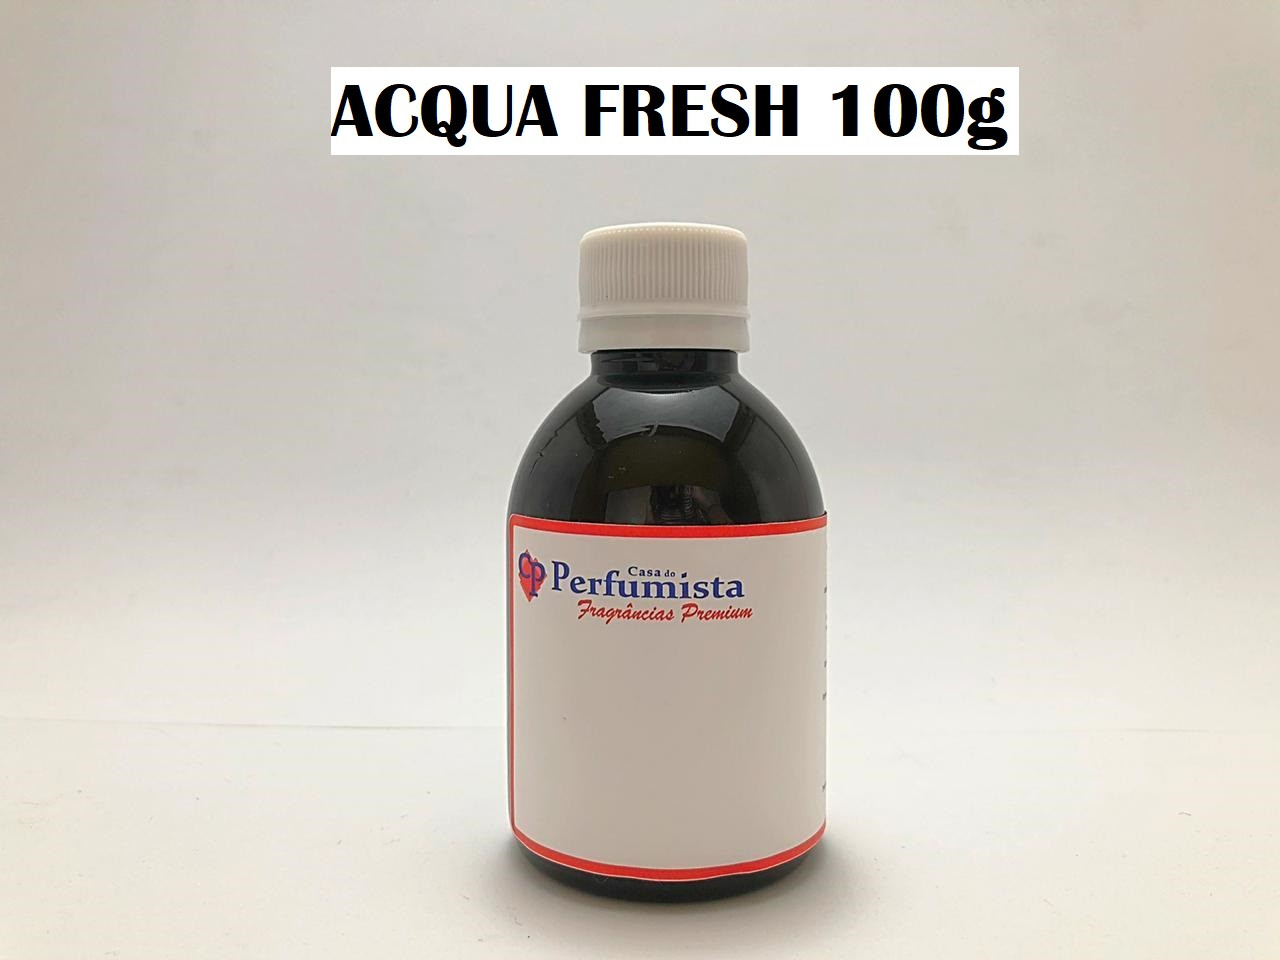 ACQUA FRESH - 100g